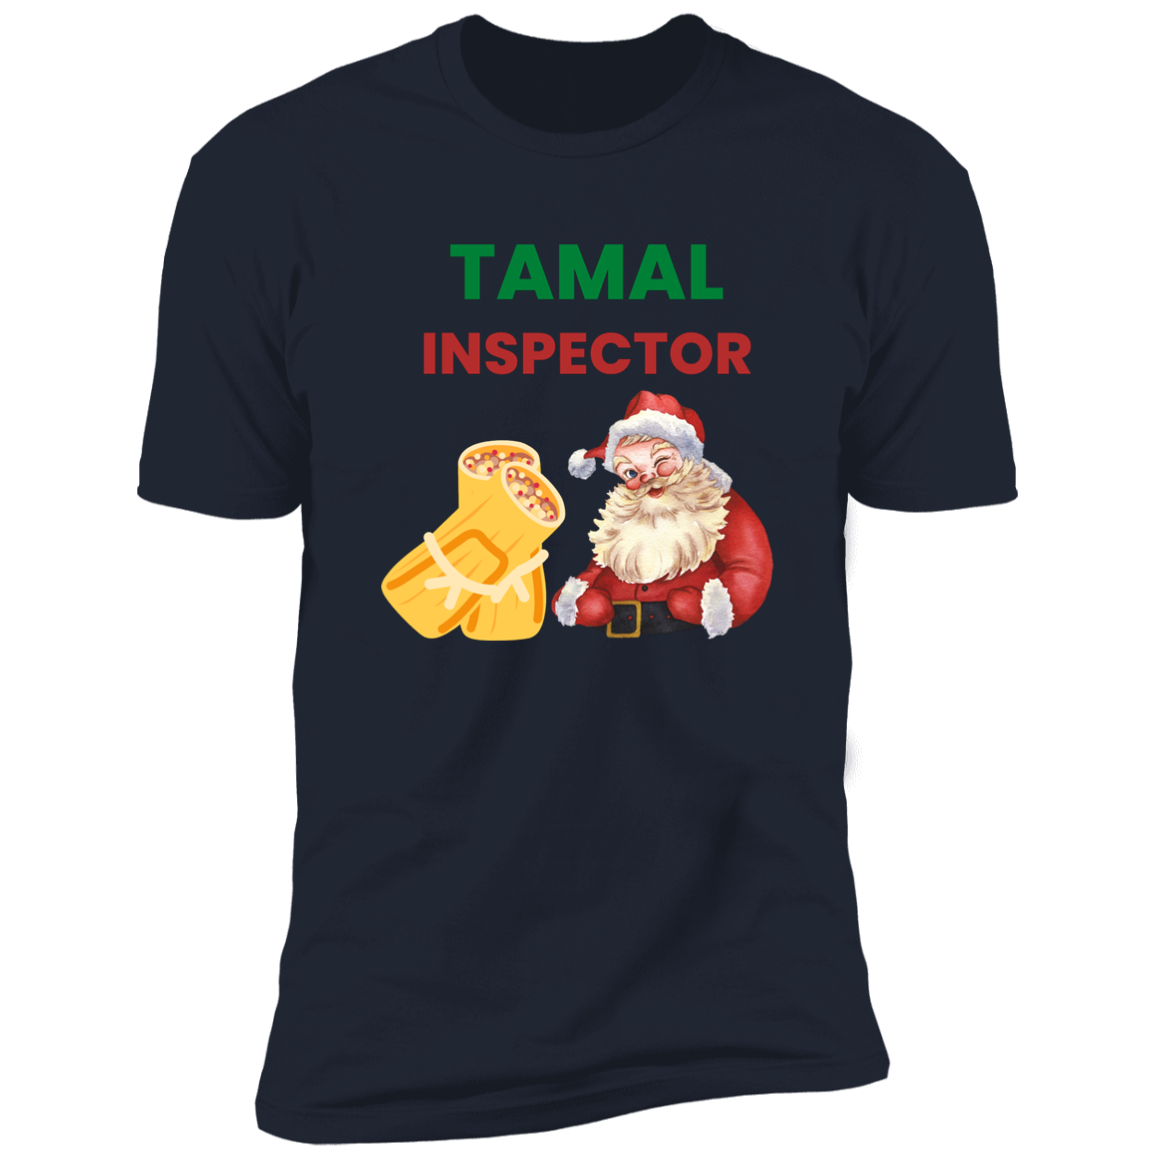 TAMAL INSPECTOR Premium Short Sleeve Tee (Closeout)